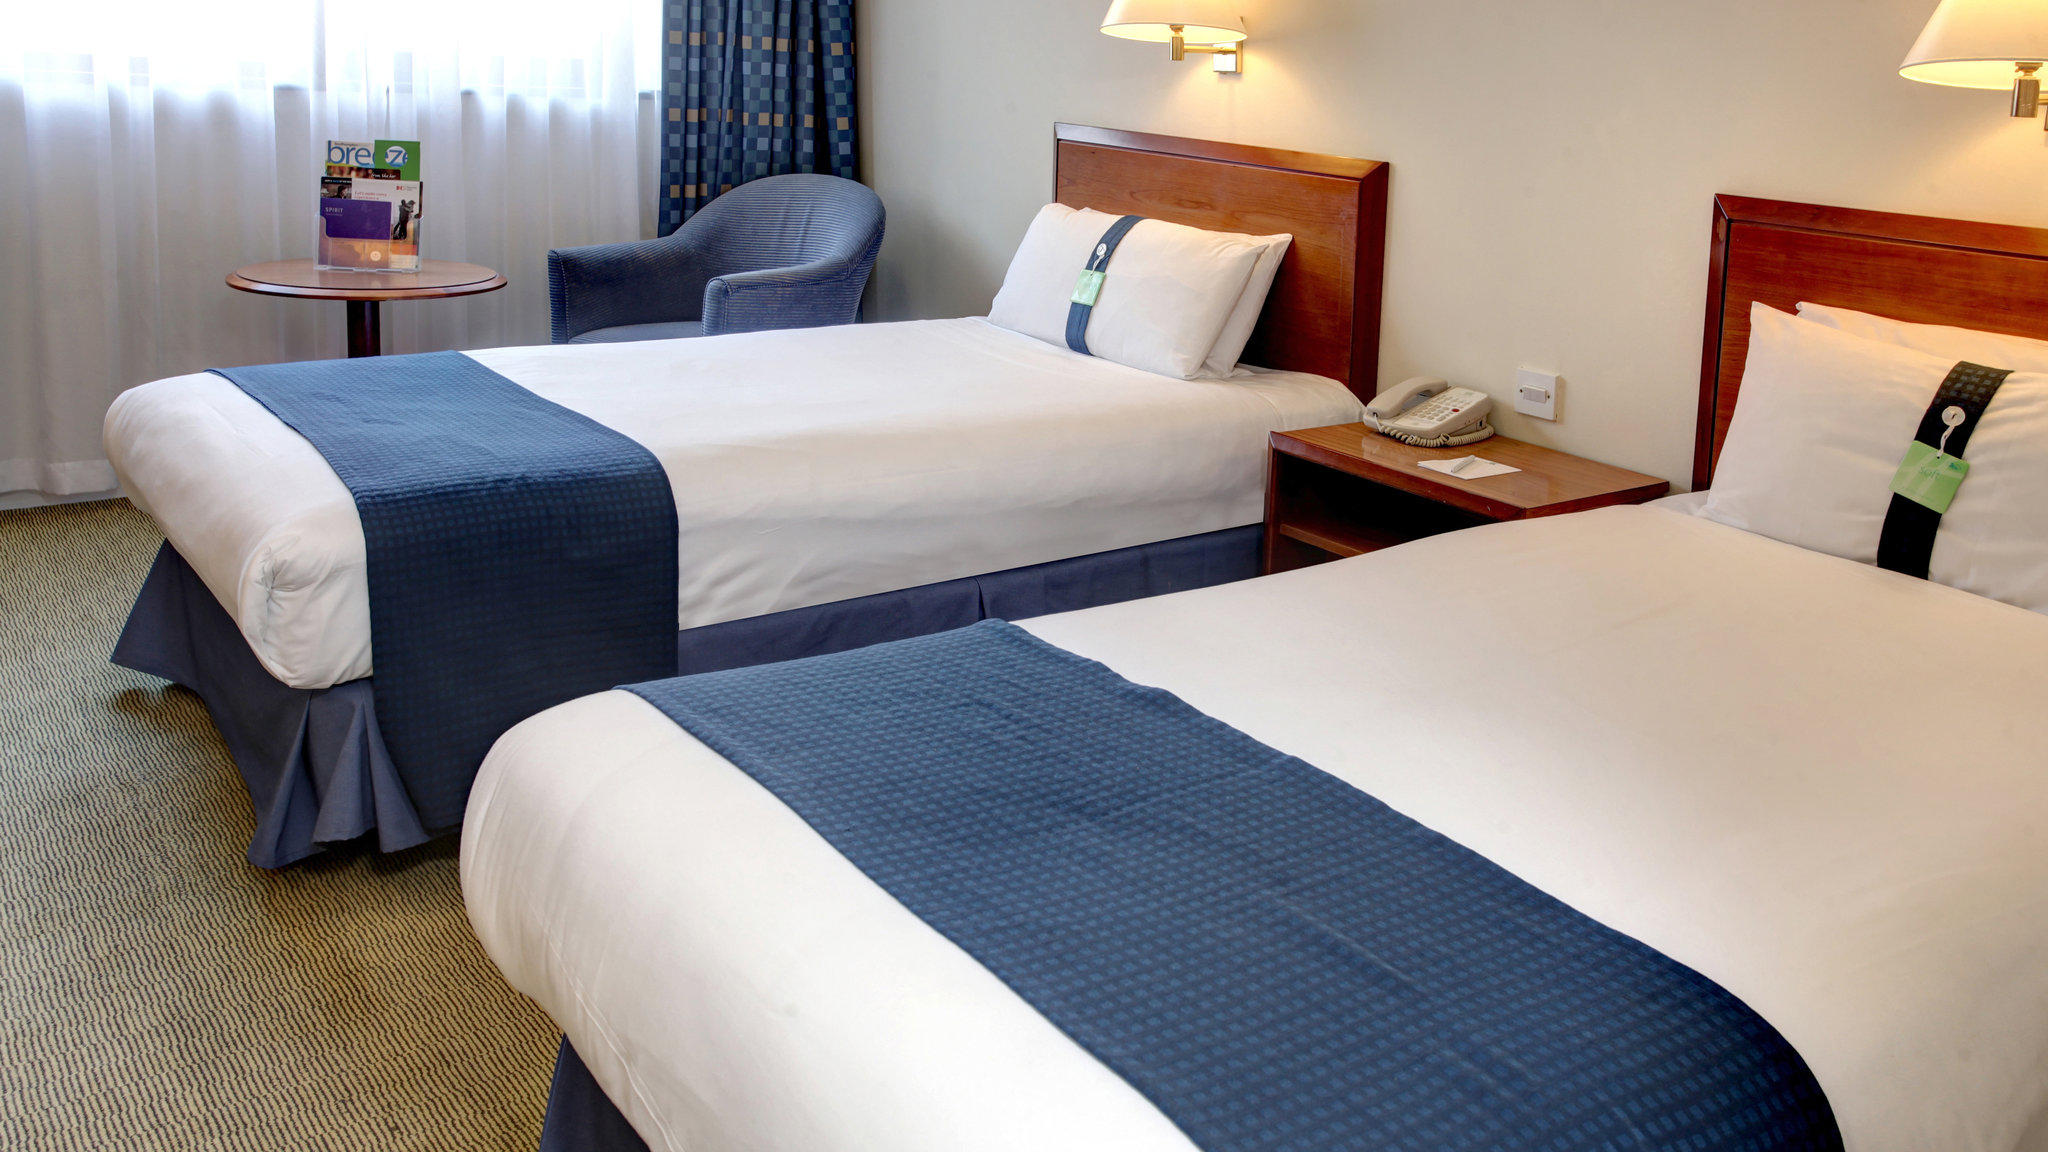 Holiday Inn Fareham - Solent, an IHG Hotel Fareham 01329 745600